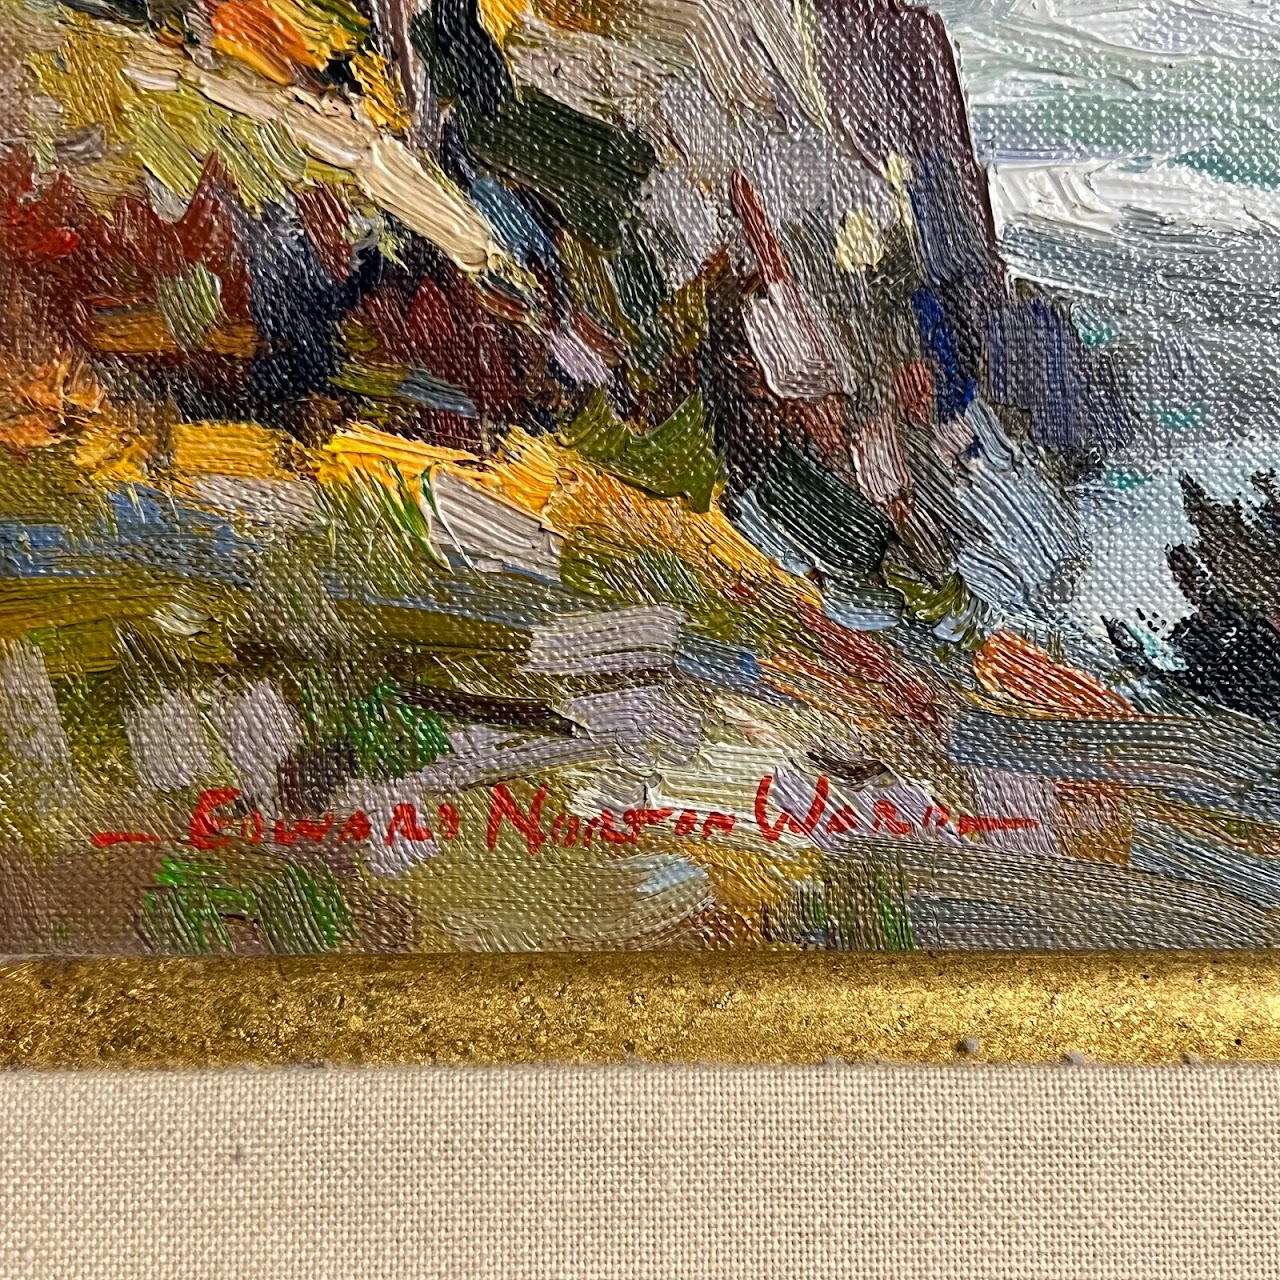 Edward Norton Ward 'Point Lobos Seas' Signed Oil Painting